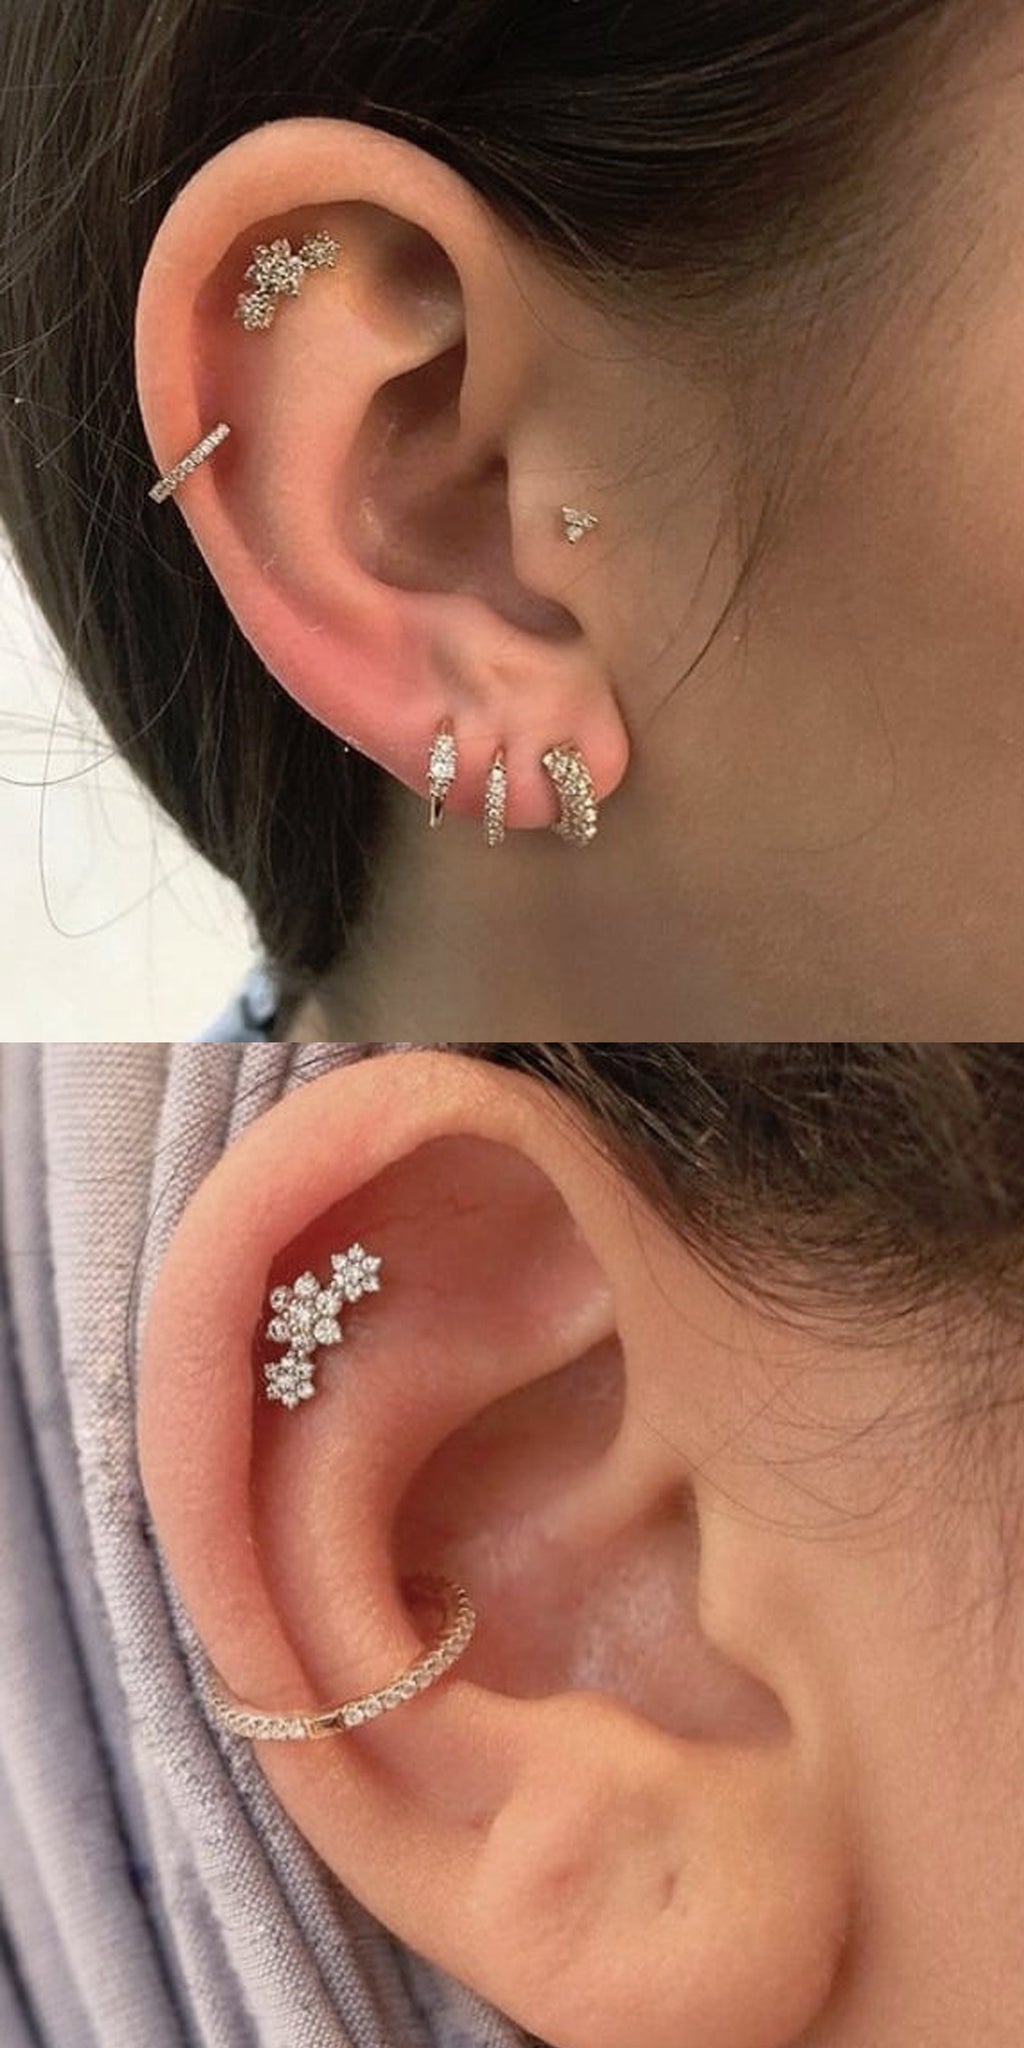 Celebrity Multiple Ear Piercing Ideas at MyBodiArt.com - Triple Flower Cartilage Earring Stud - Single Cartilage Ring - Conch Jewelry